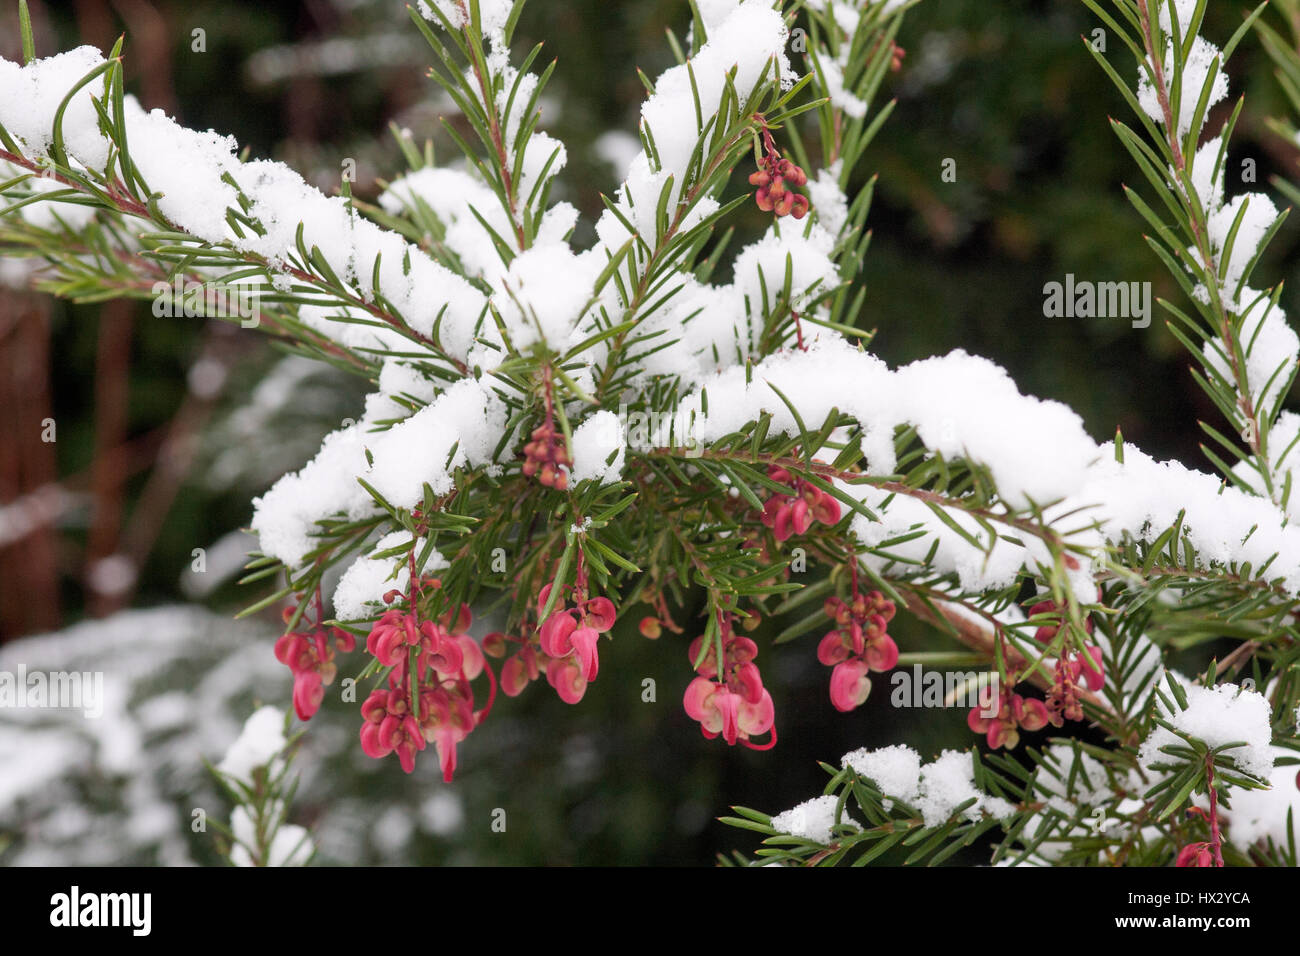 Grevillea rosmarinifolia 'Jenkinsii' covered in snow Stock Photo